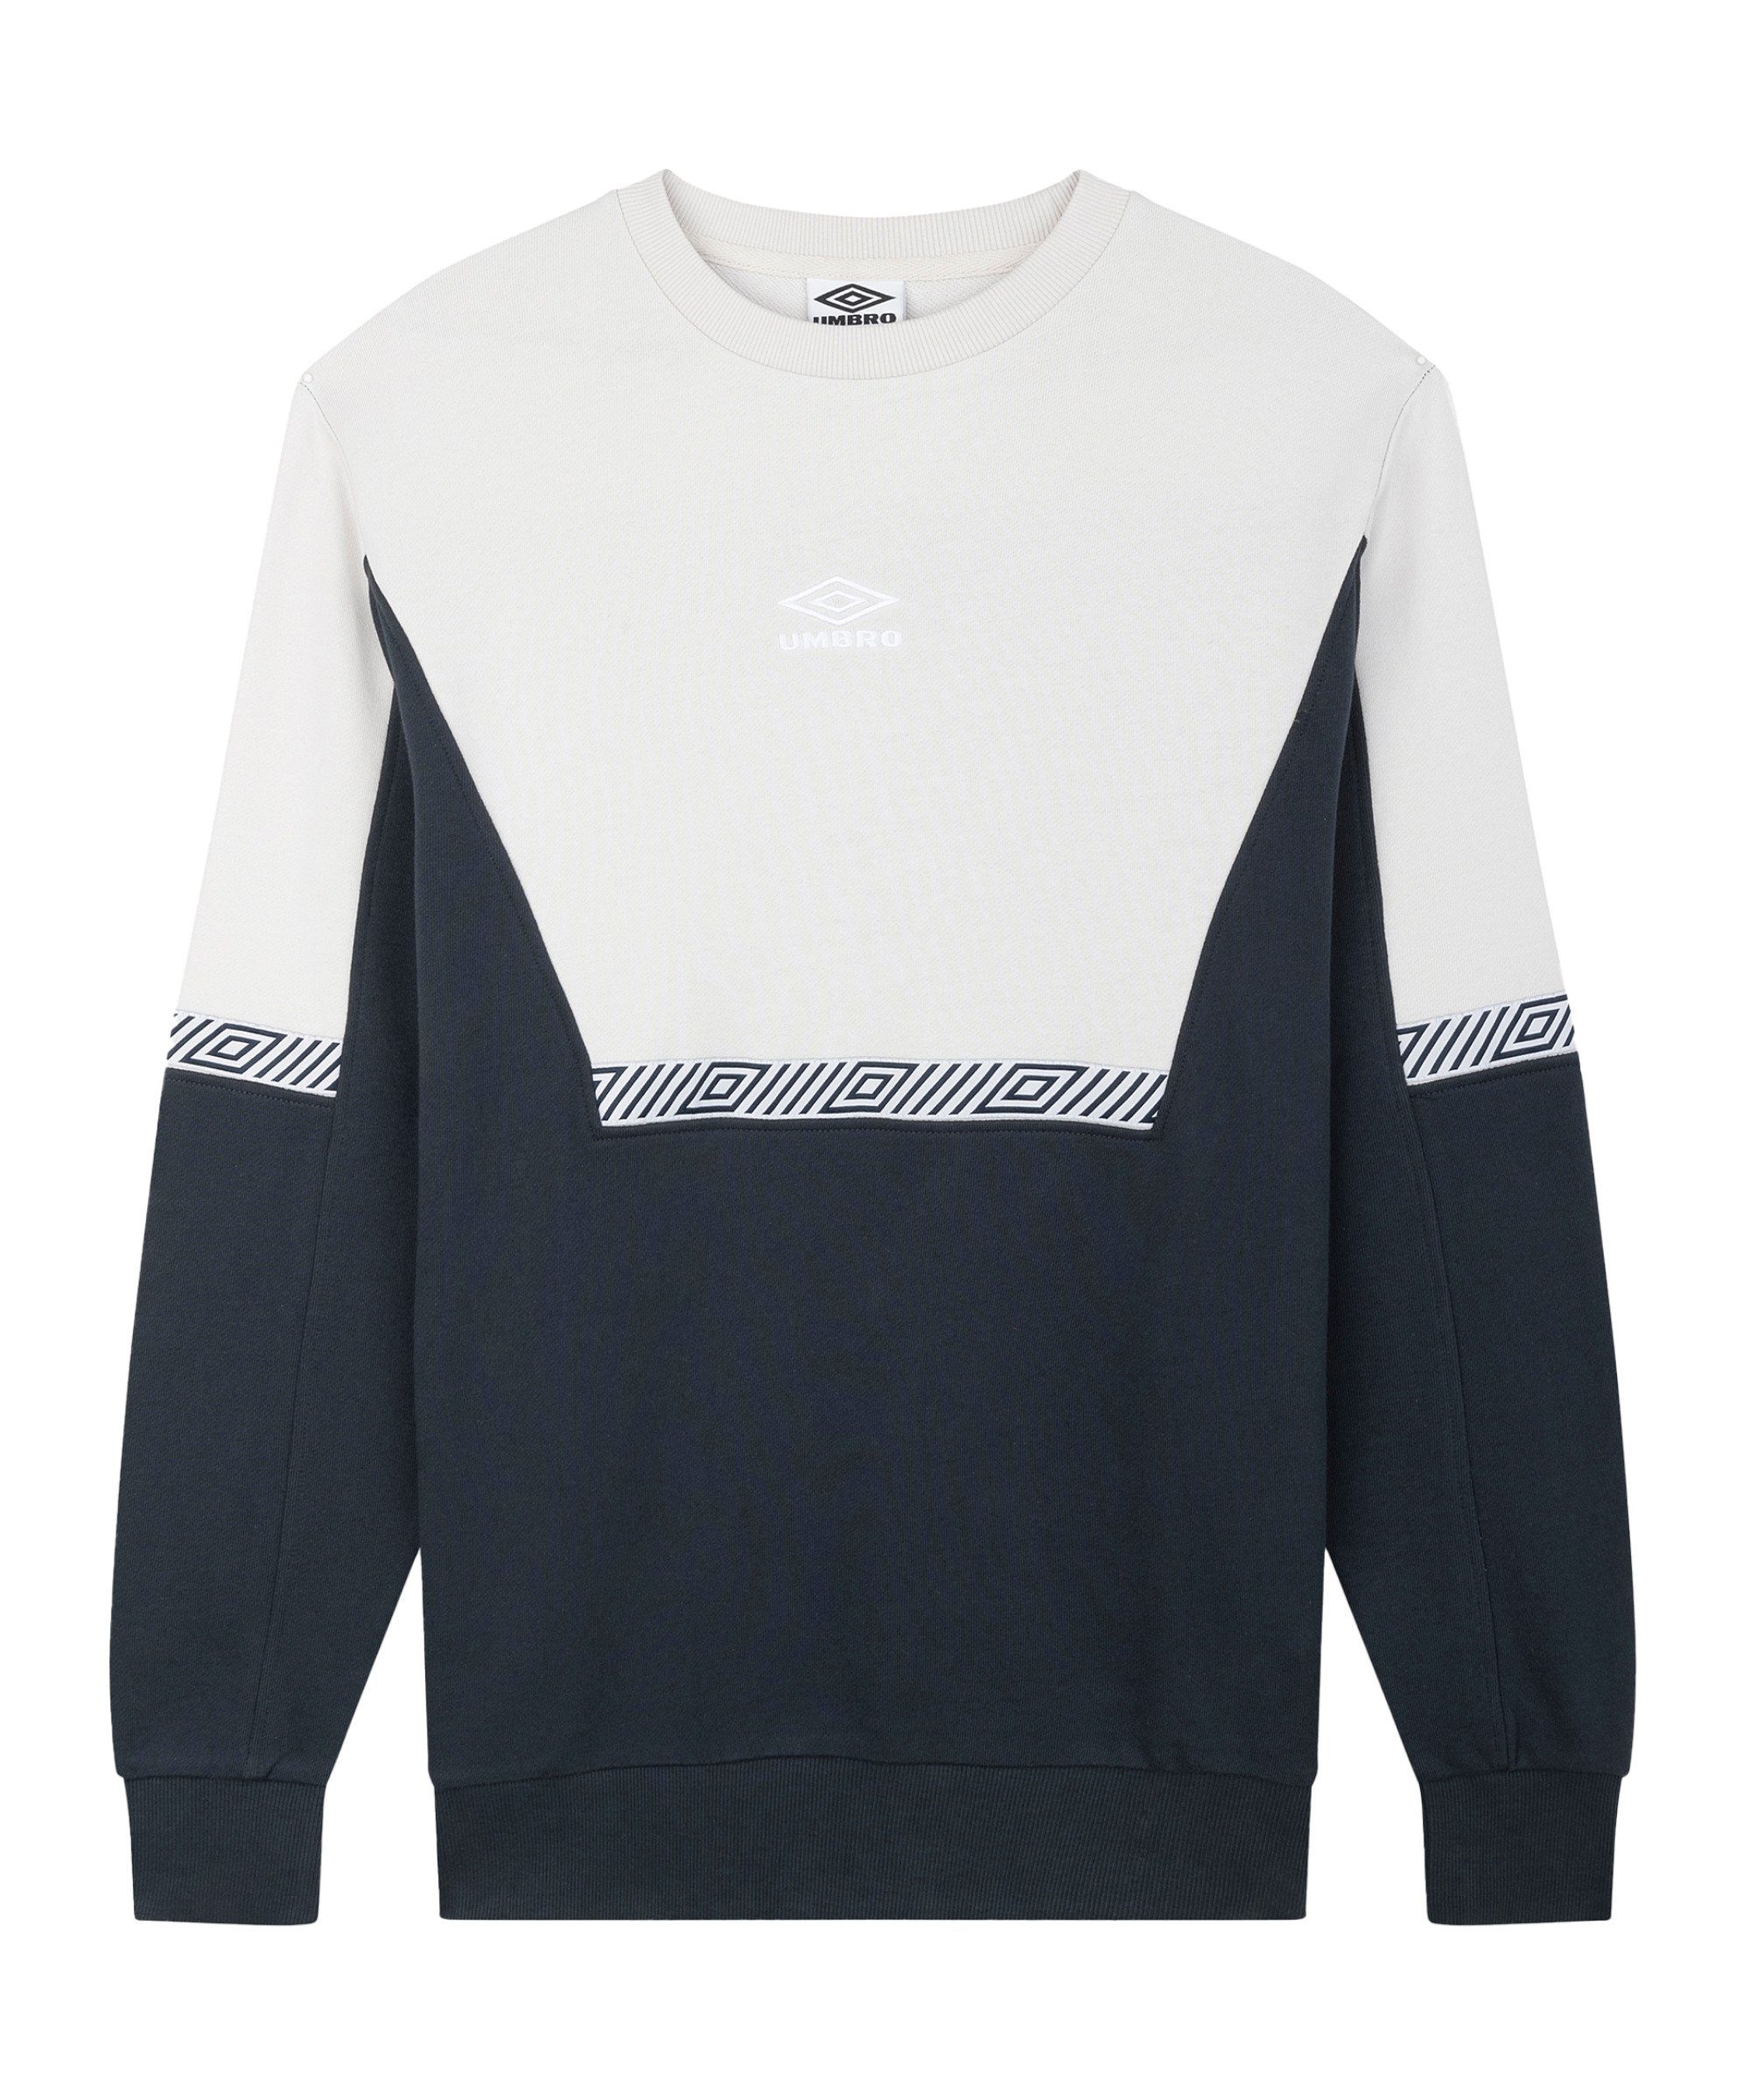 Sweatshirt Club Sports Sweatshirt Style Umbro graublau